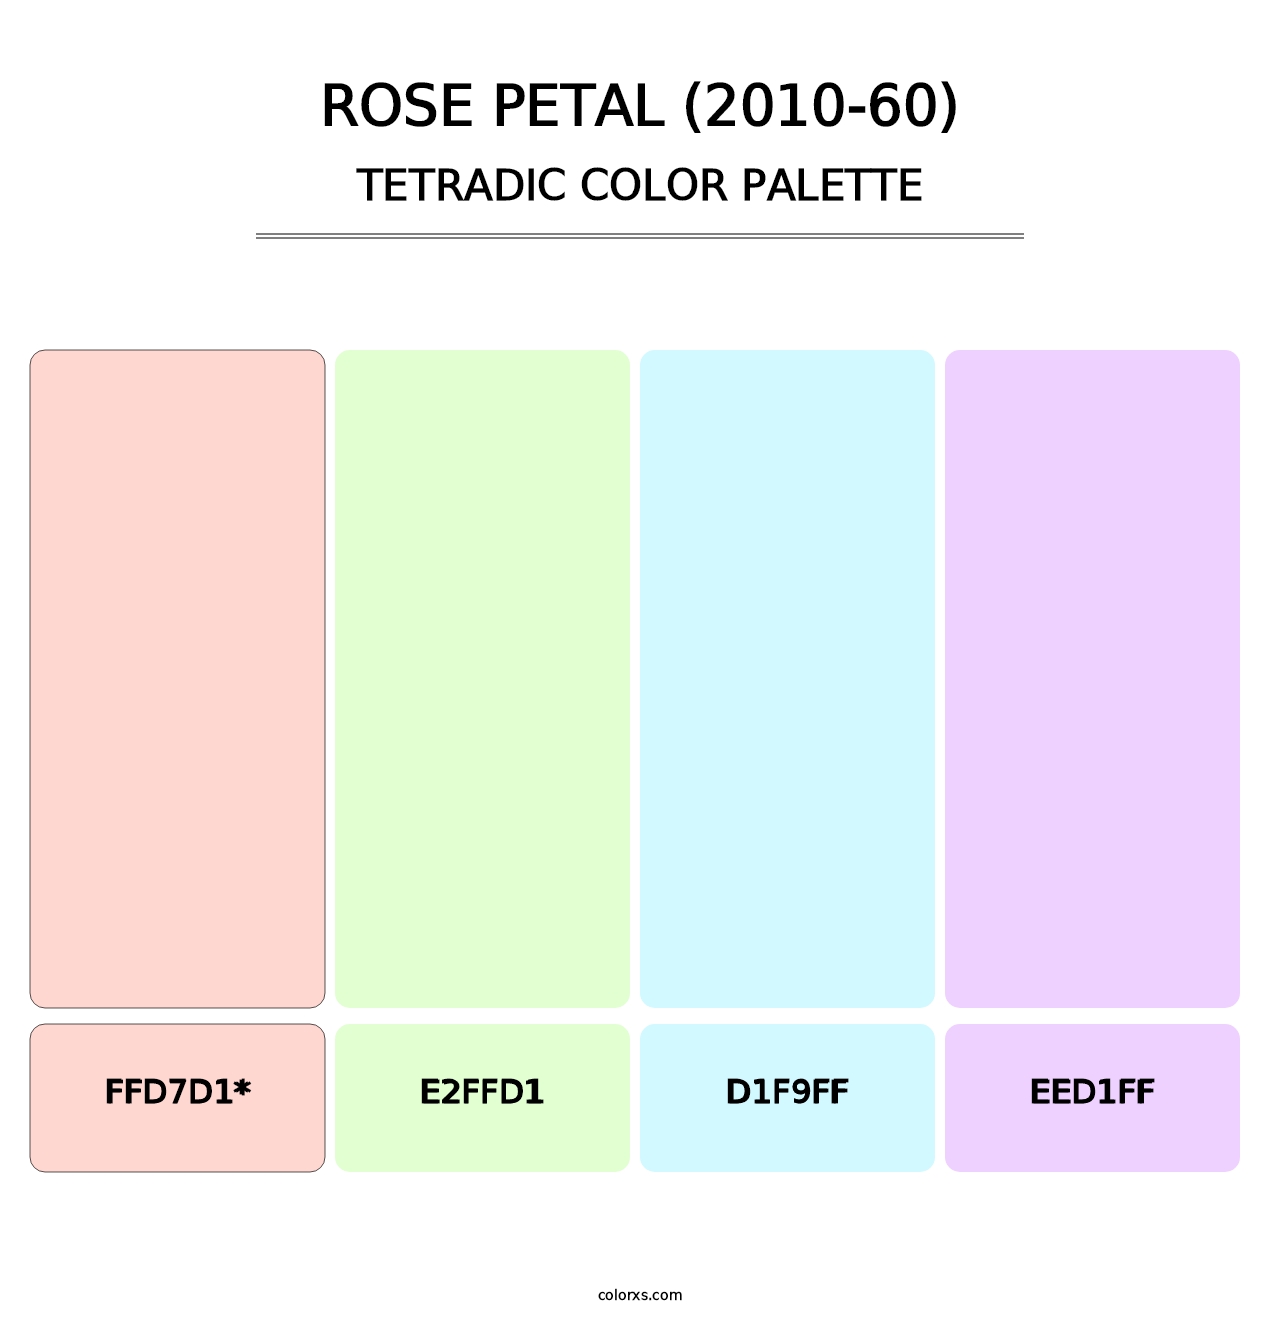 Rose Petal (2010-60) - Tetradic Color Palette